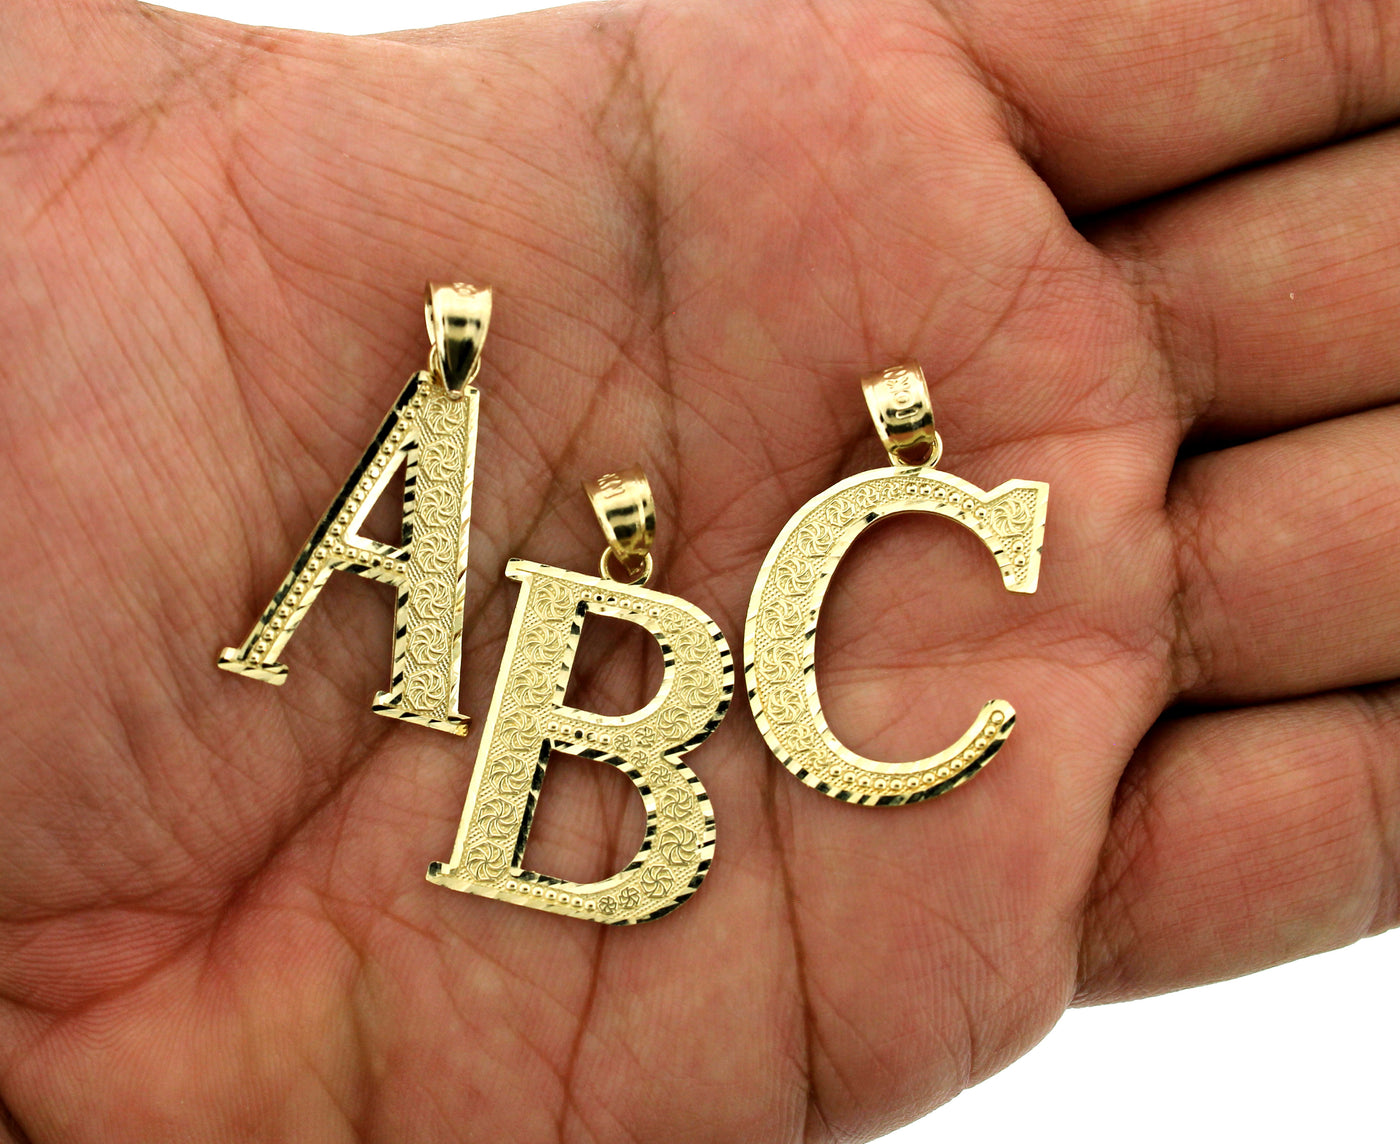 10K Yellow Gold Diamond Cut Initial Letter Charm Pendant A-Z Alphabet Rope Chain Necklace Set